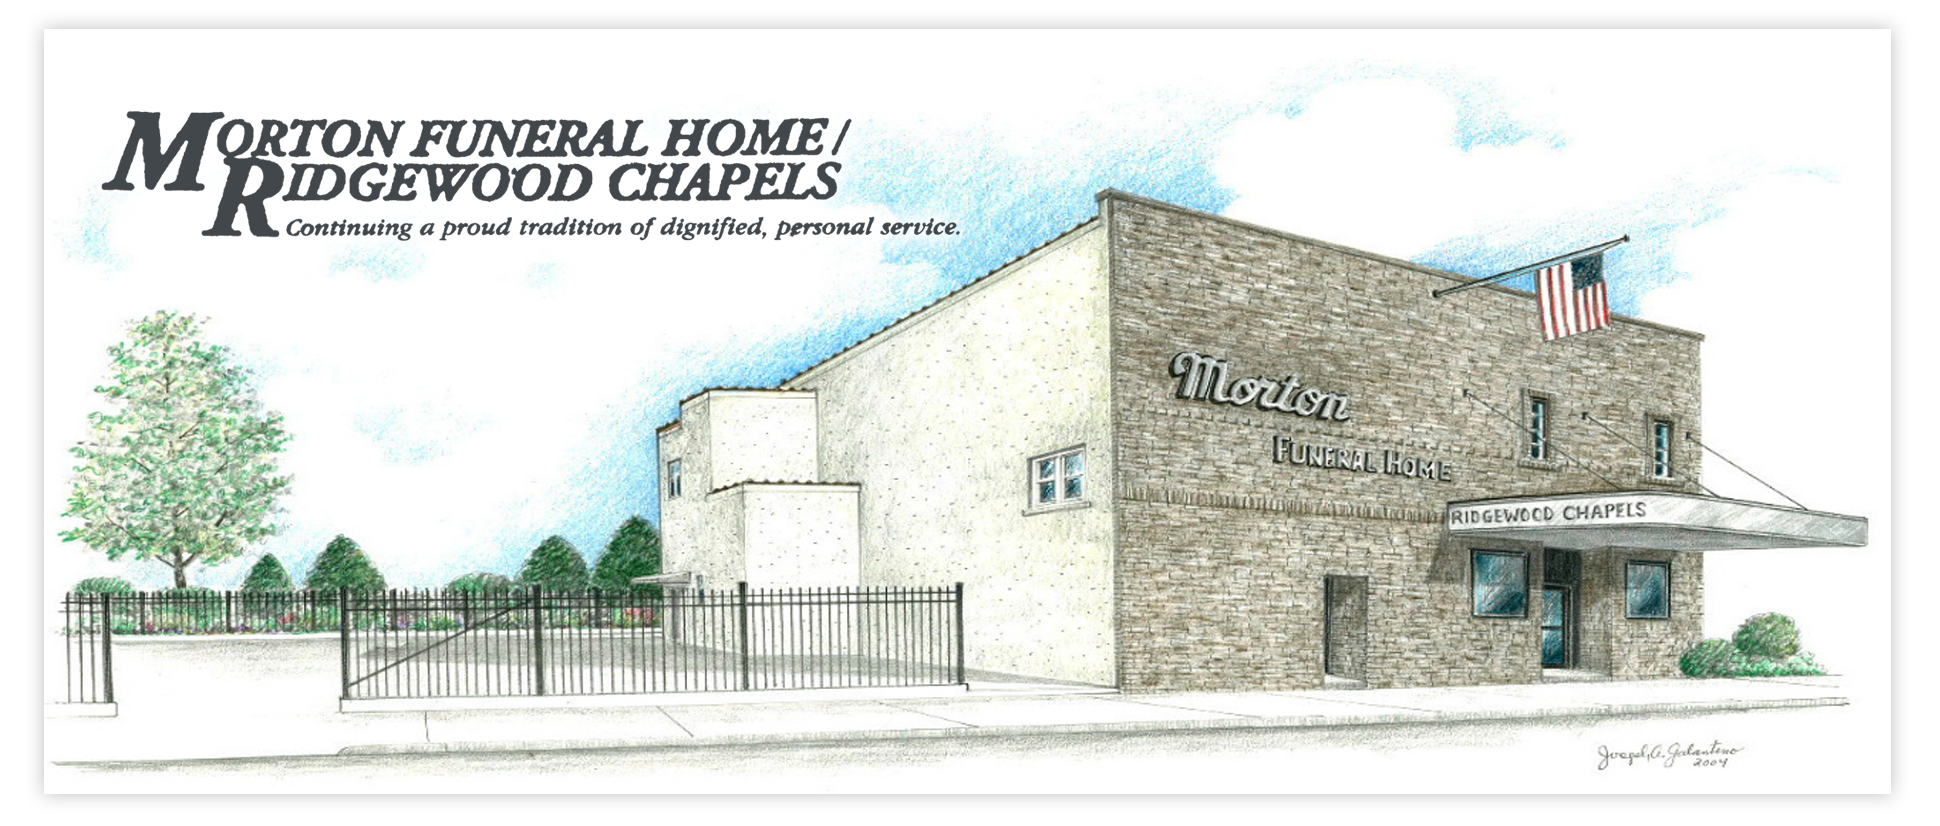 Morton Funeral Home Ridgewood Chapels